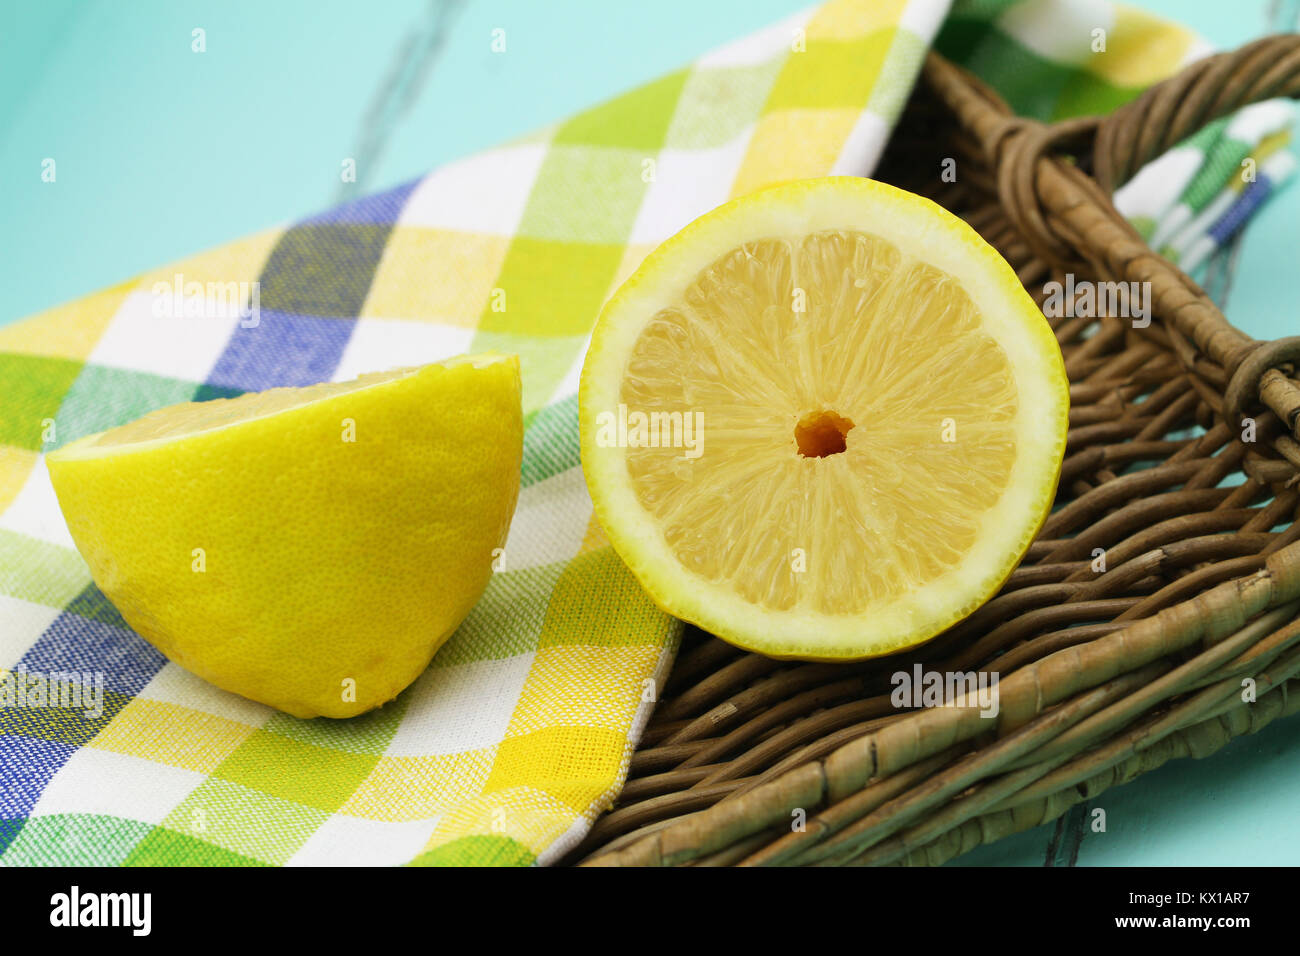 Two juicy lemon halves on wicker tray, closeup Stock Photo